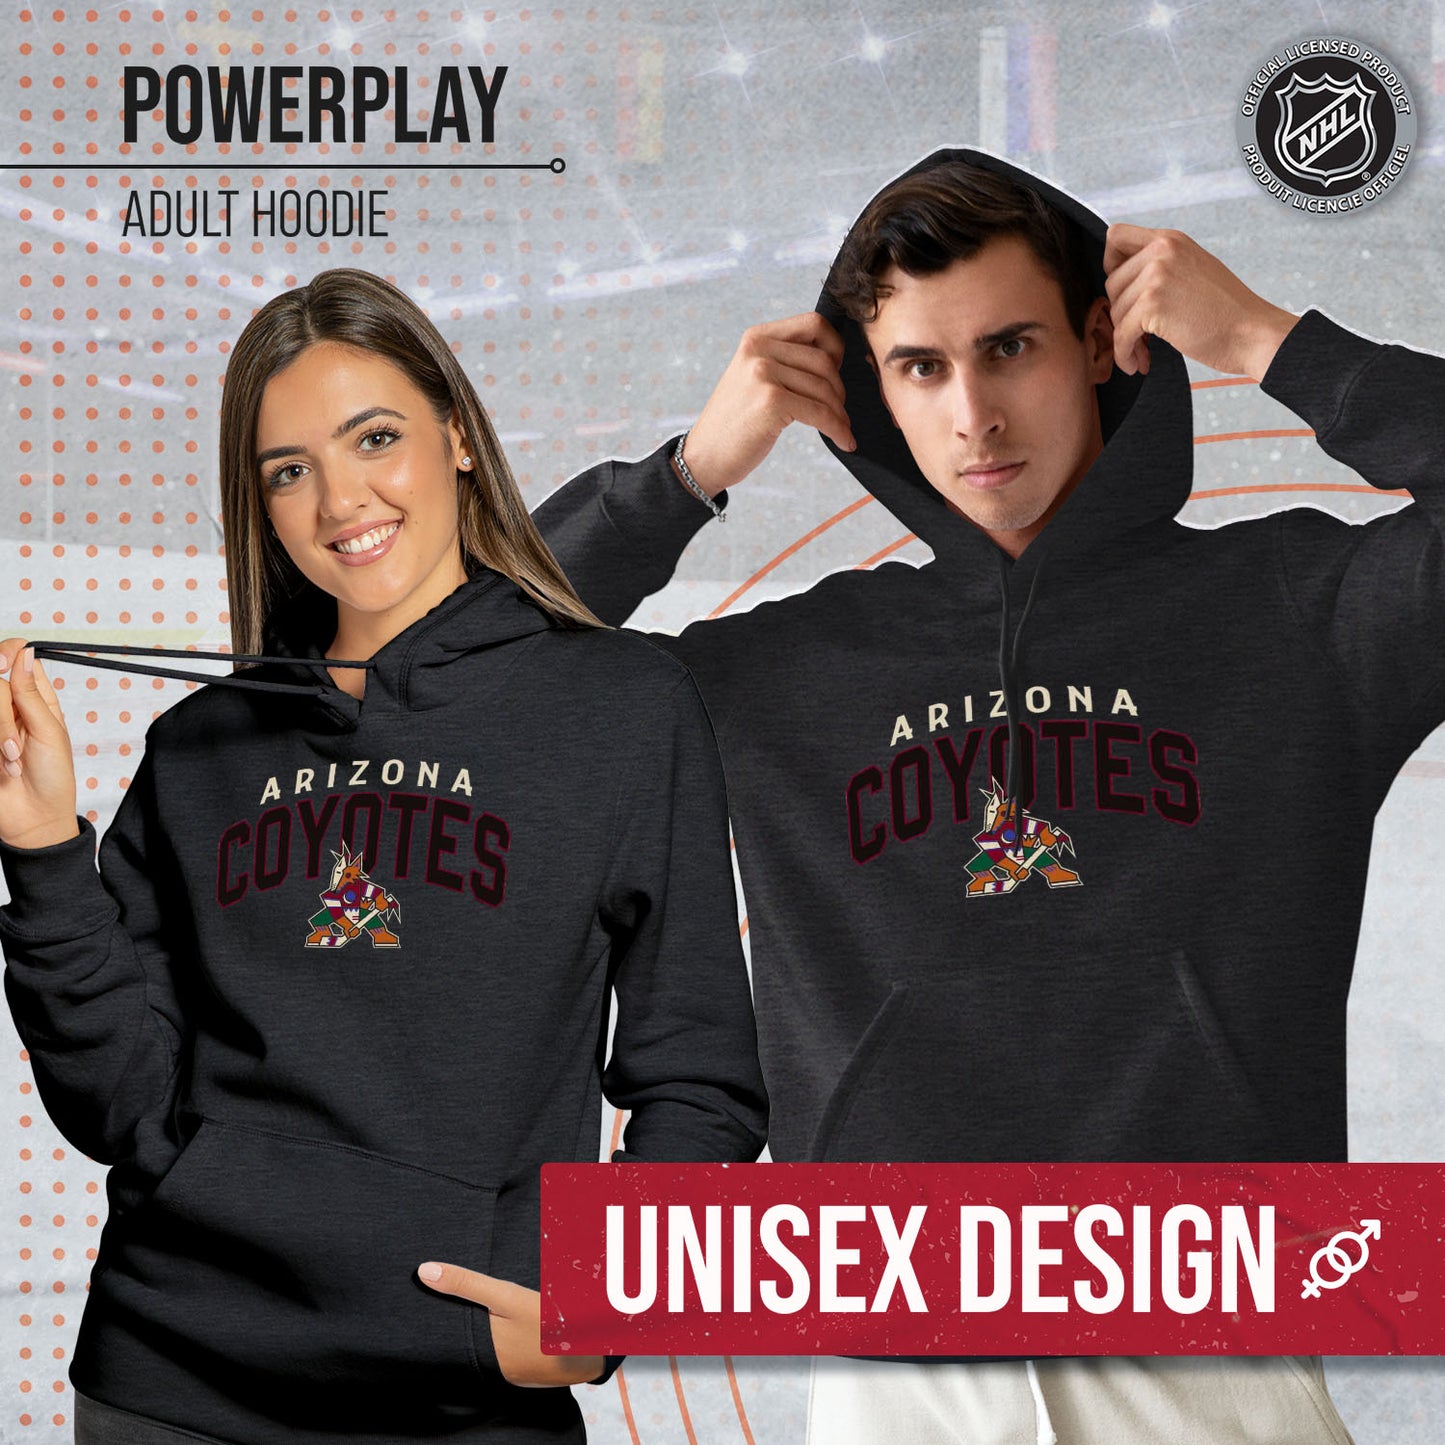 Arizona Coyotes NHL Adult Unisex Powerplay Hooded Sweatshirt - Black Heather